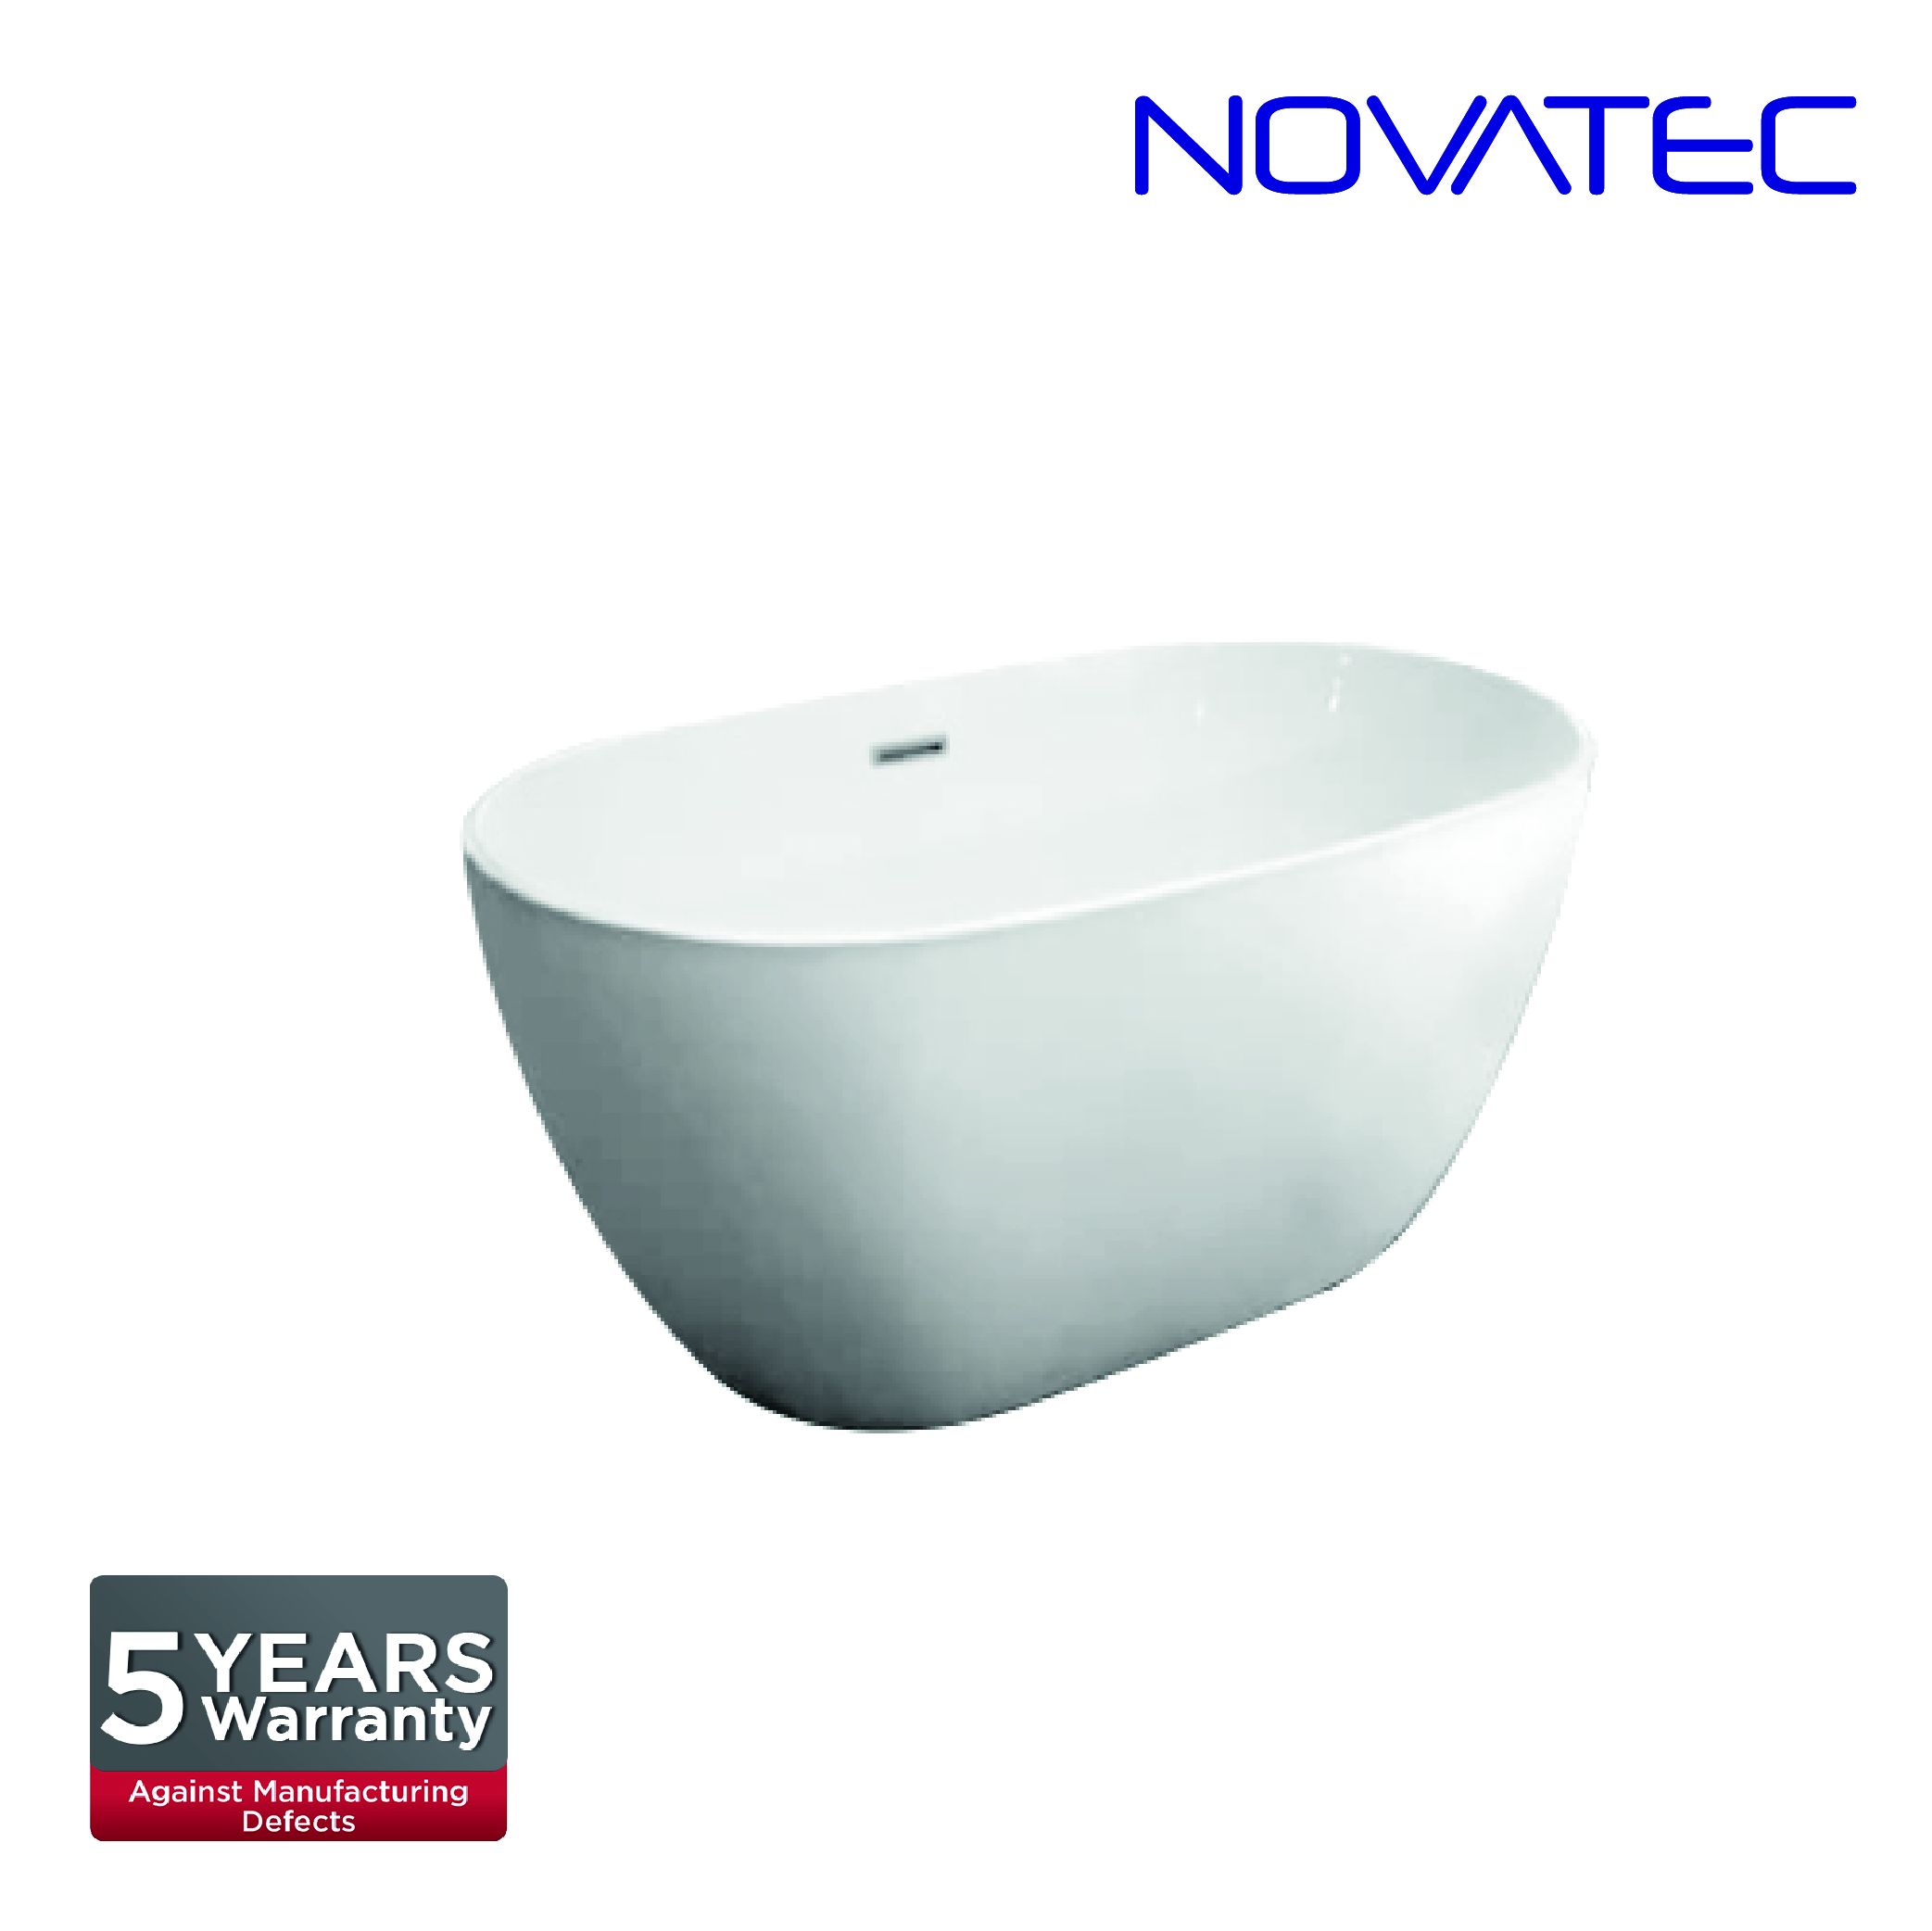 Novatec SW Geneva Bath Tub BT 160014A